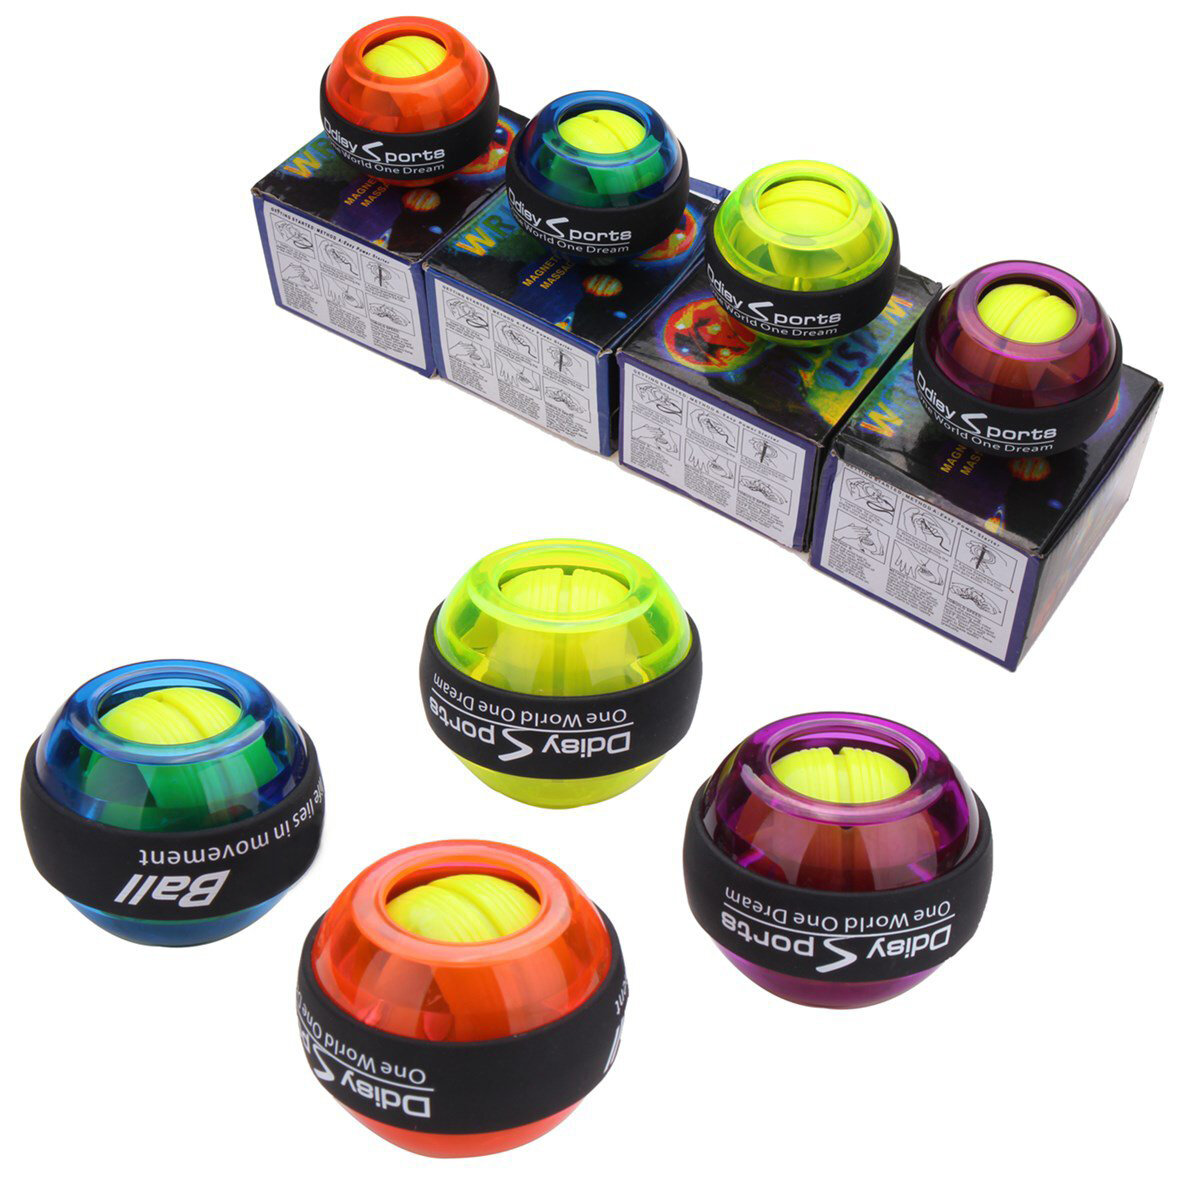 

Illuminated Colorful Gyroscope Power Wrist Trainer Ball Arm Exerciser Gravity Ball Grip Ball